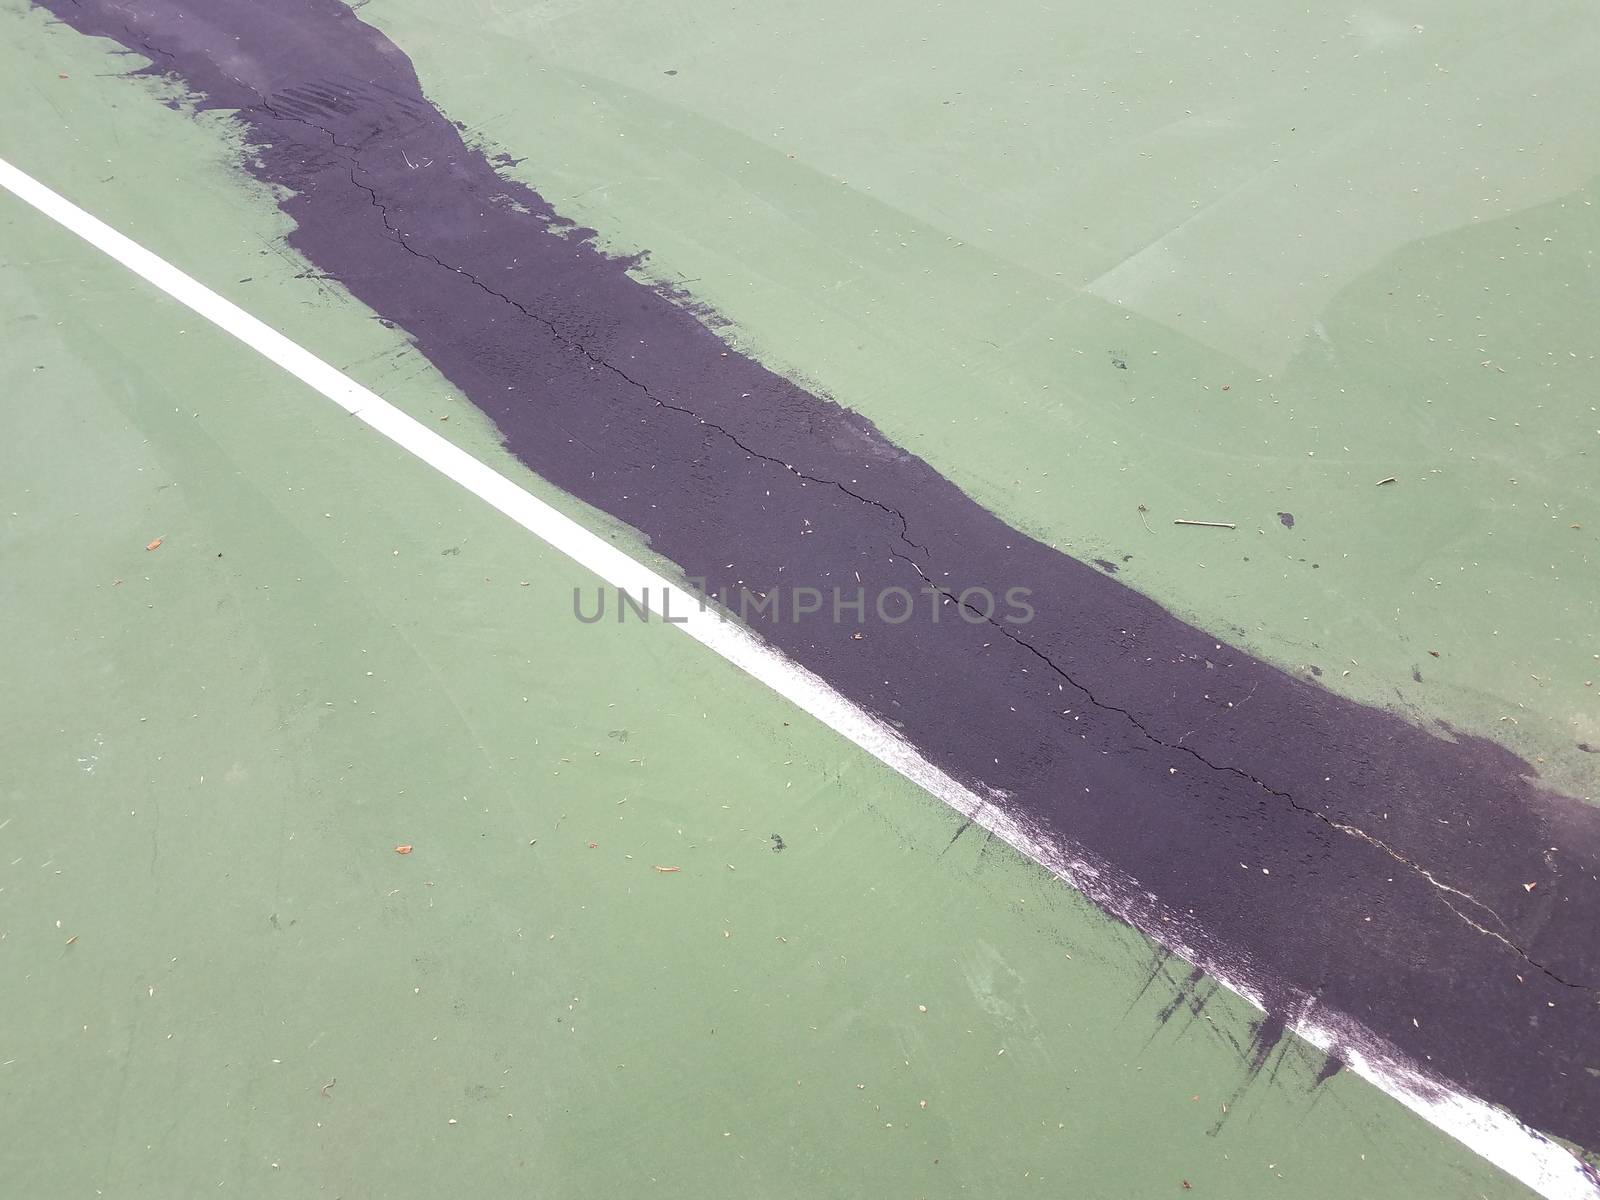 black tar to repair cracks on green tennis court by stockphotofan1